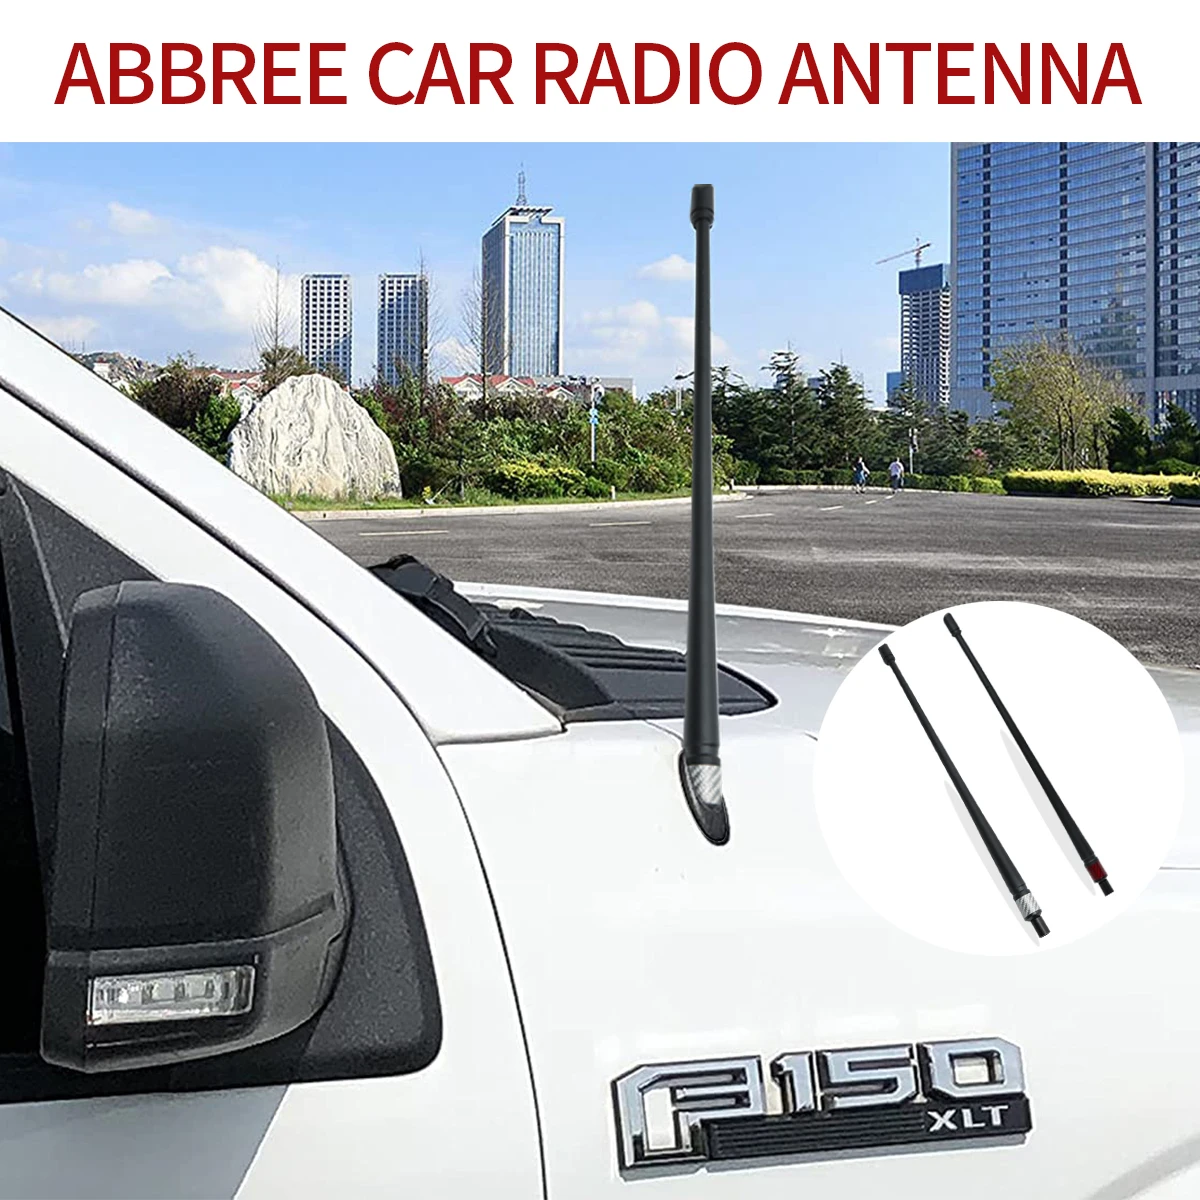 ABBREE Auto Radio Antena, Antenu Elastīga Gumijas Transportlīdzekļa Antenu Toyota, Ford, Mazda VW, Audi Honda WRC Nissan0